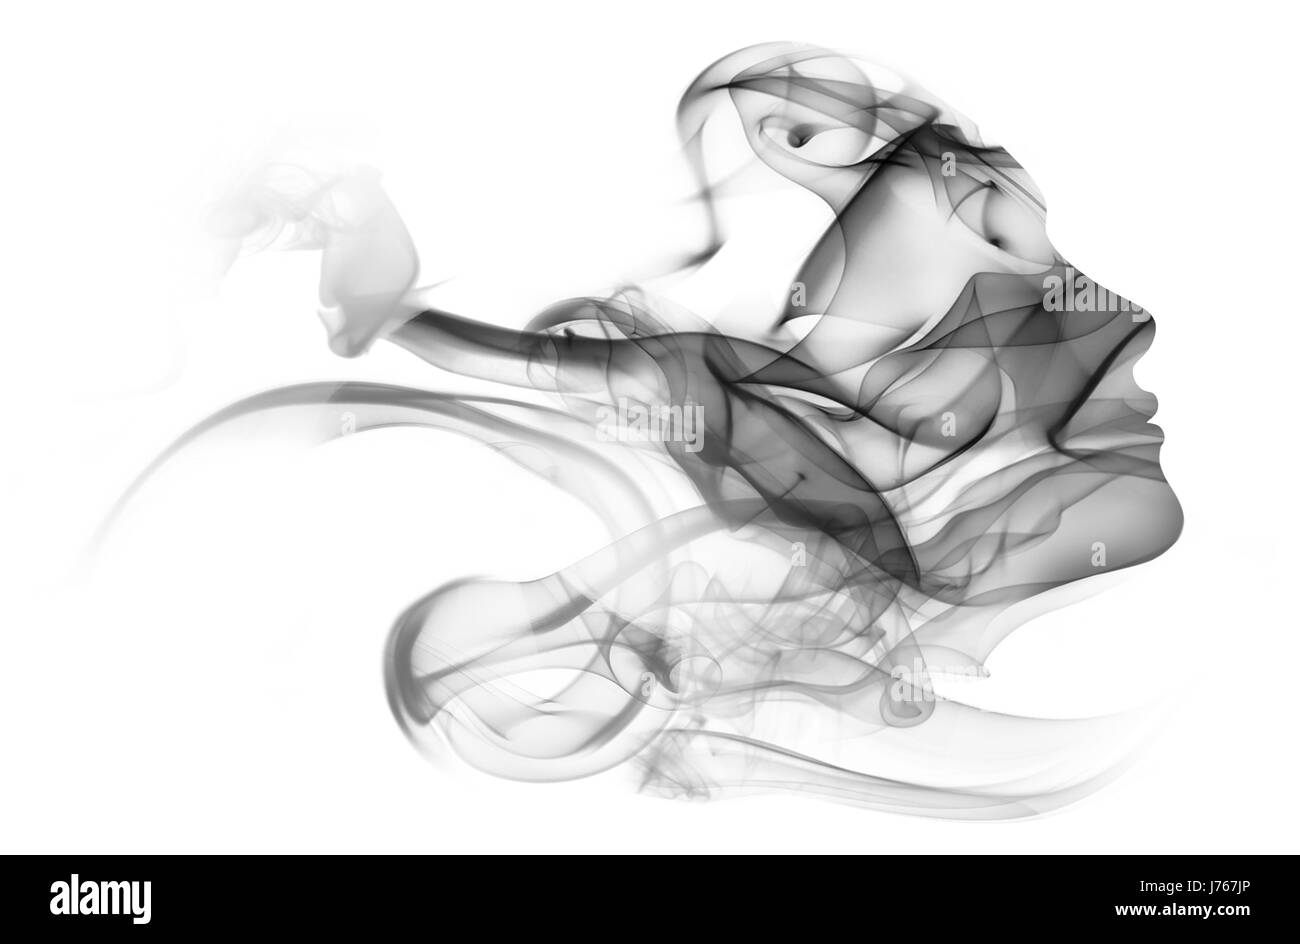 Double exposure portrait of woman and smoke. Stock Photo